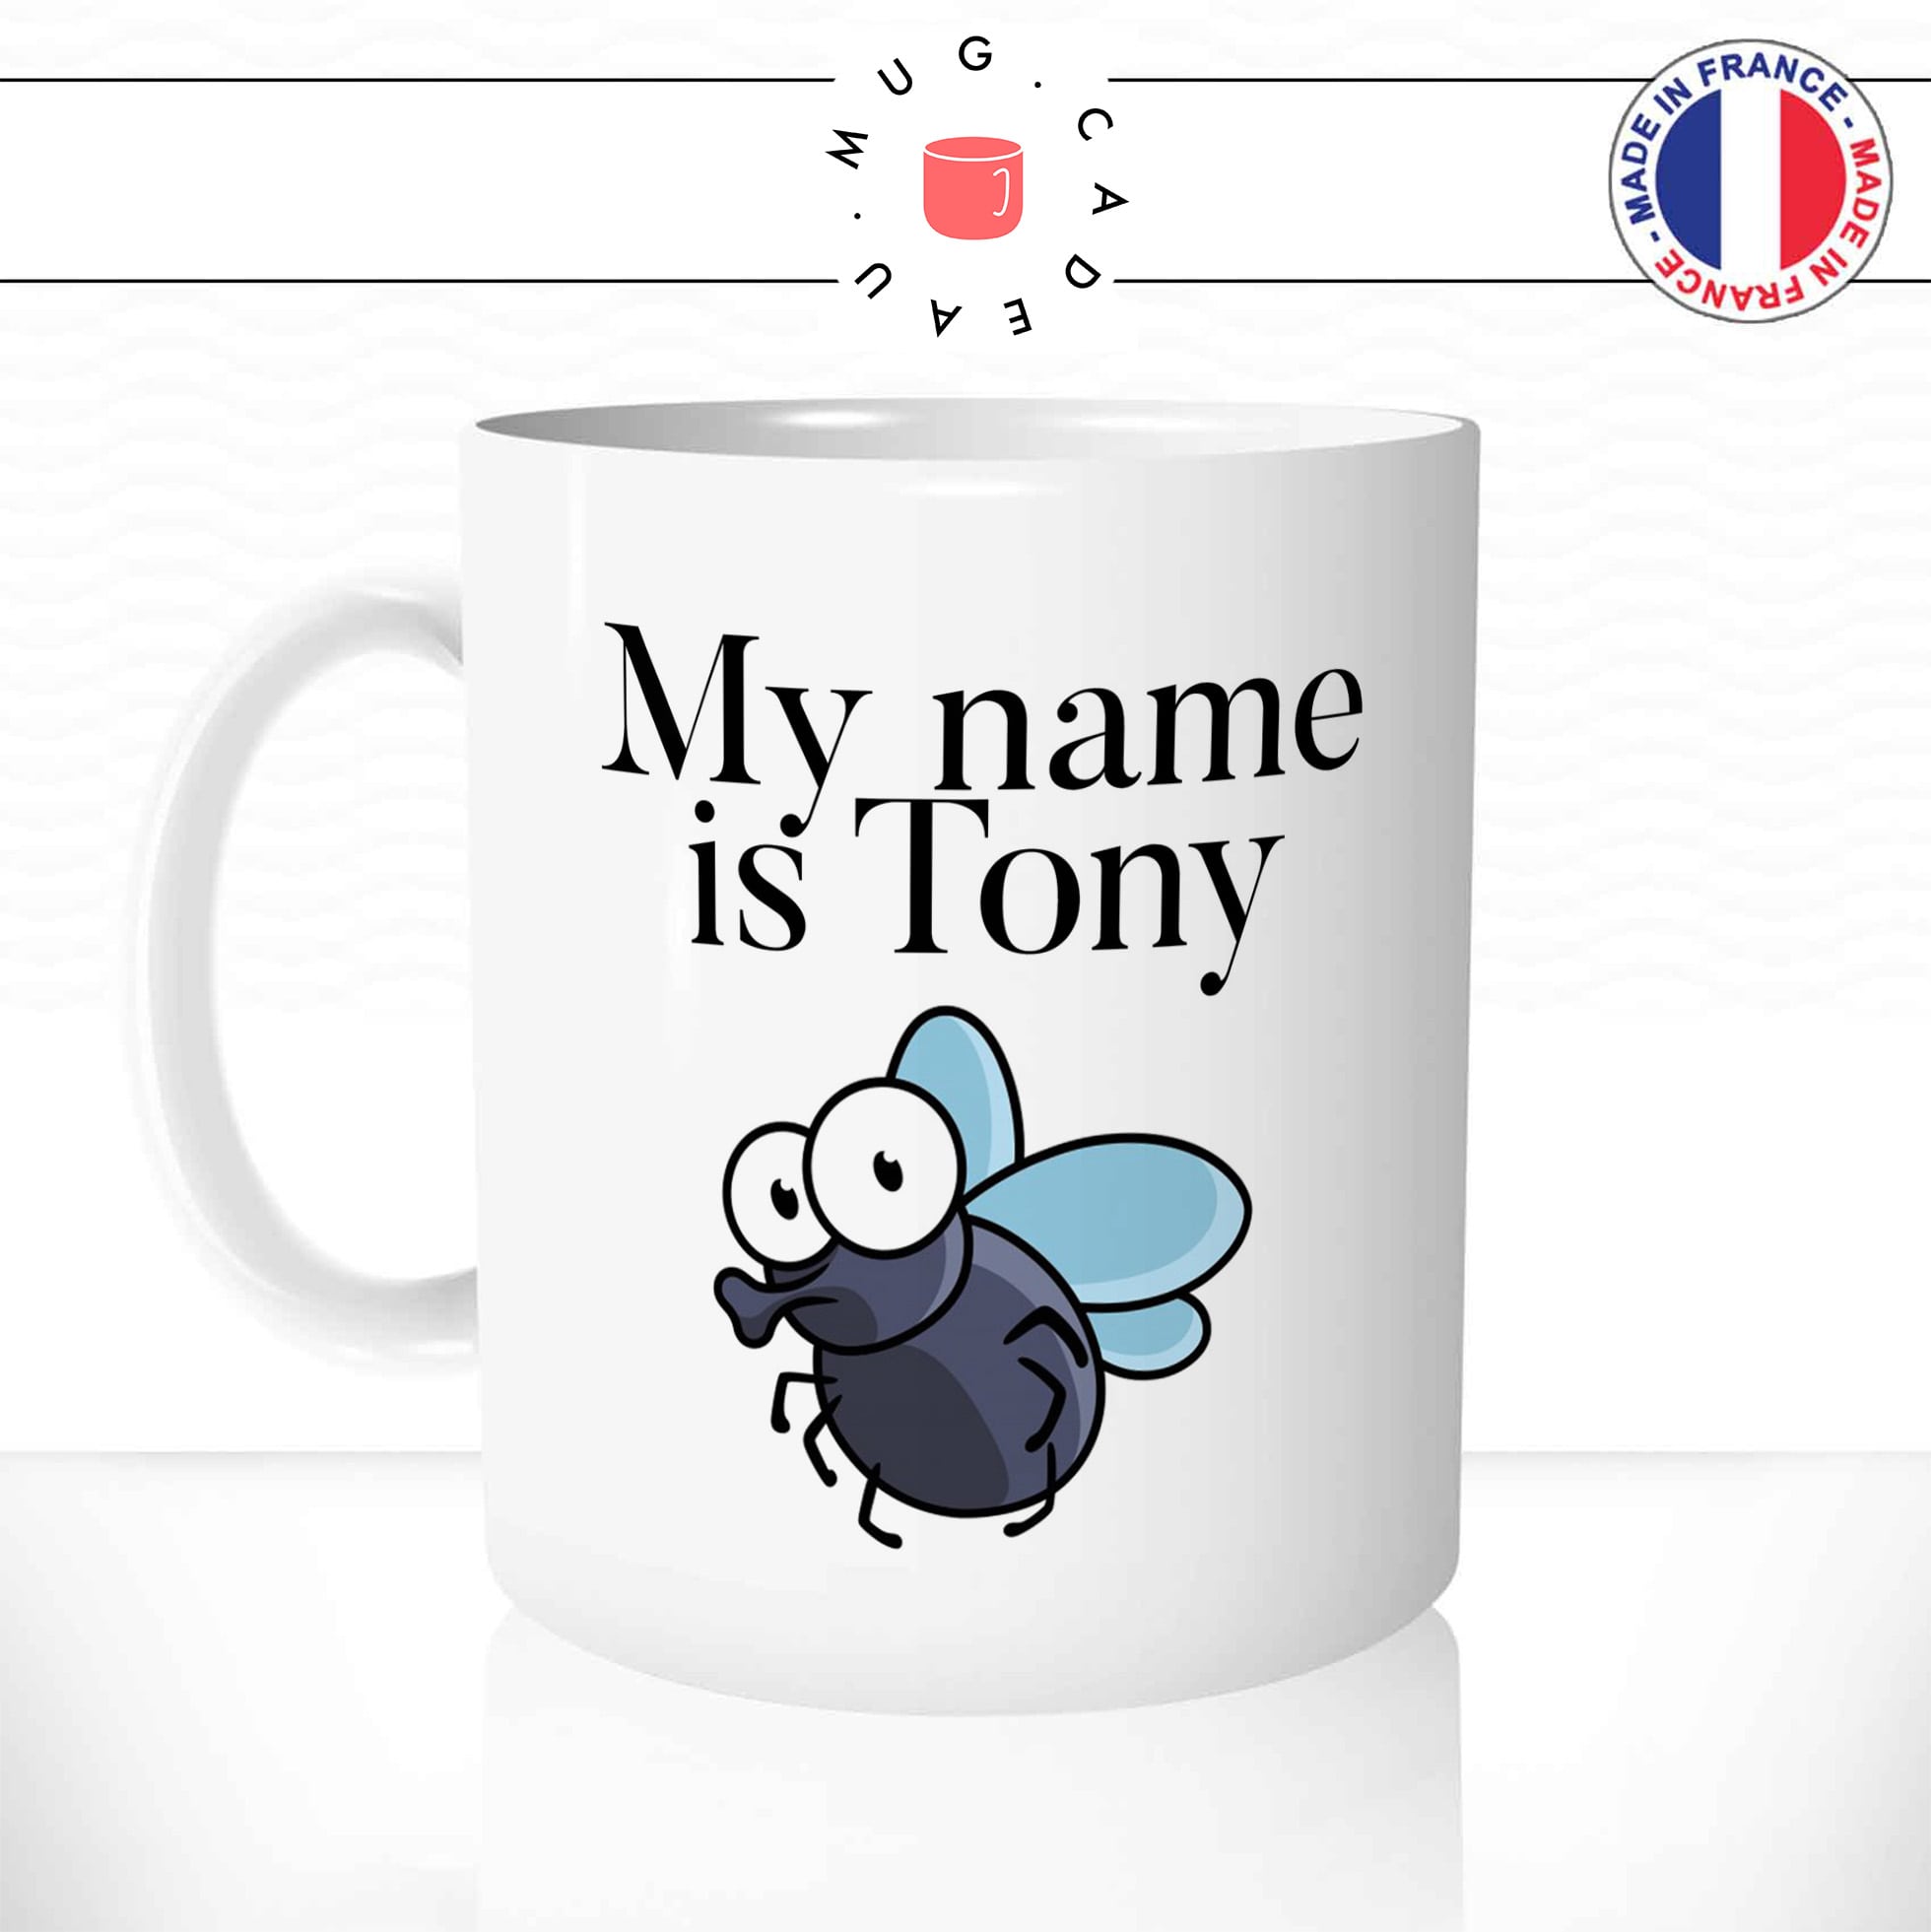 mug-tasse-my-name-is-tony-malcolm-dewey-mouche-offrir-fun-humour-idée-cadeau-original-personnalisée-min